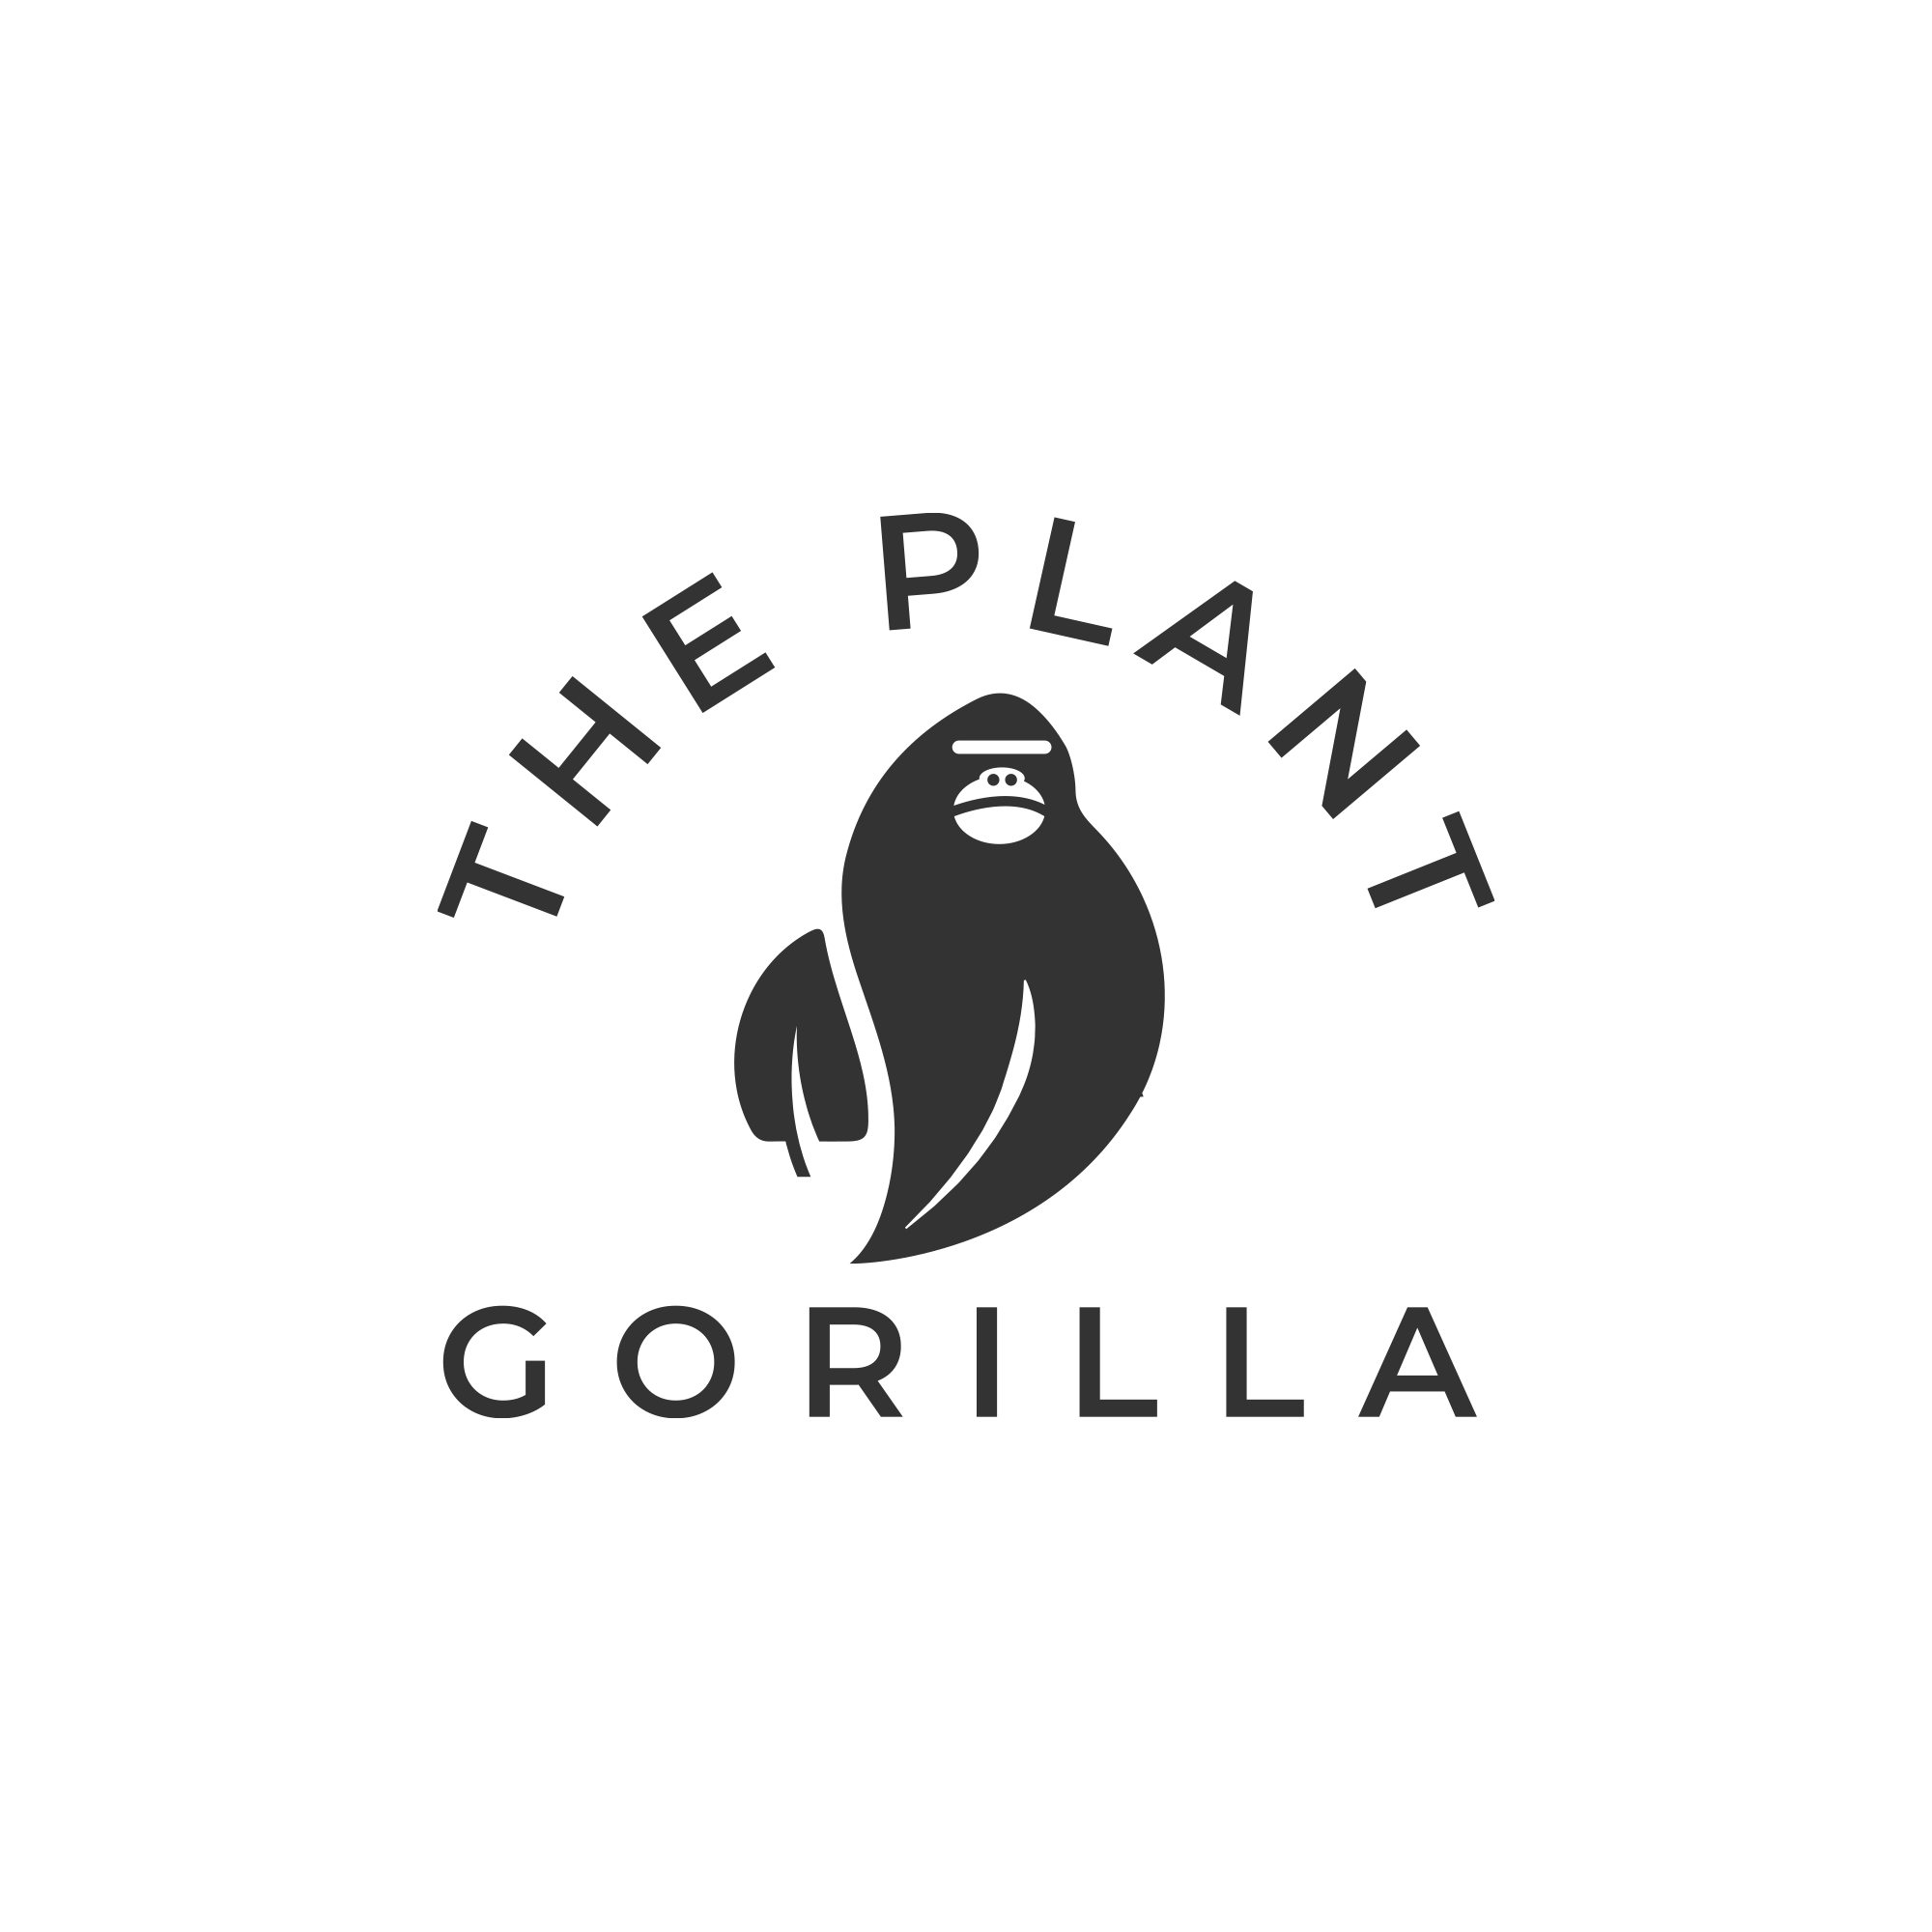 The Plant Gorilla logo